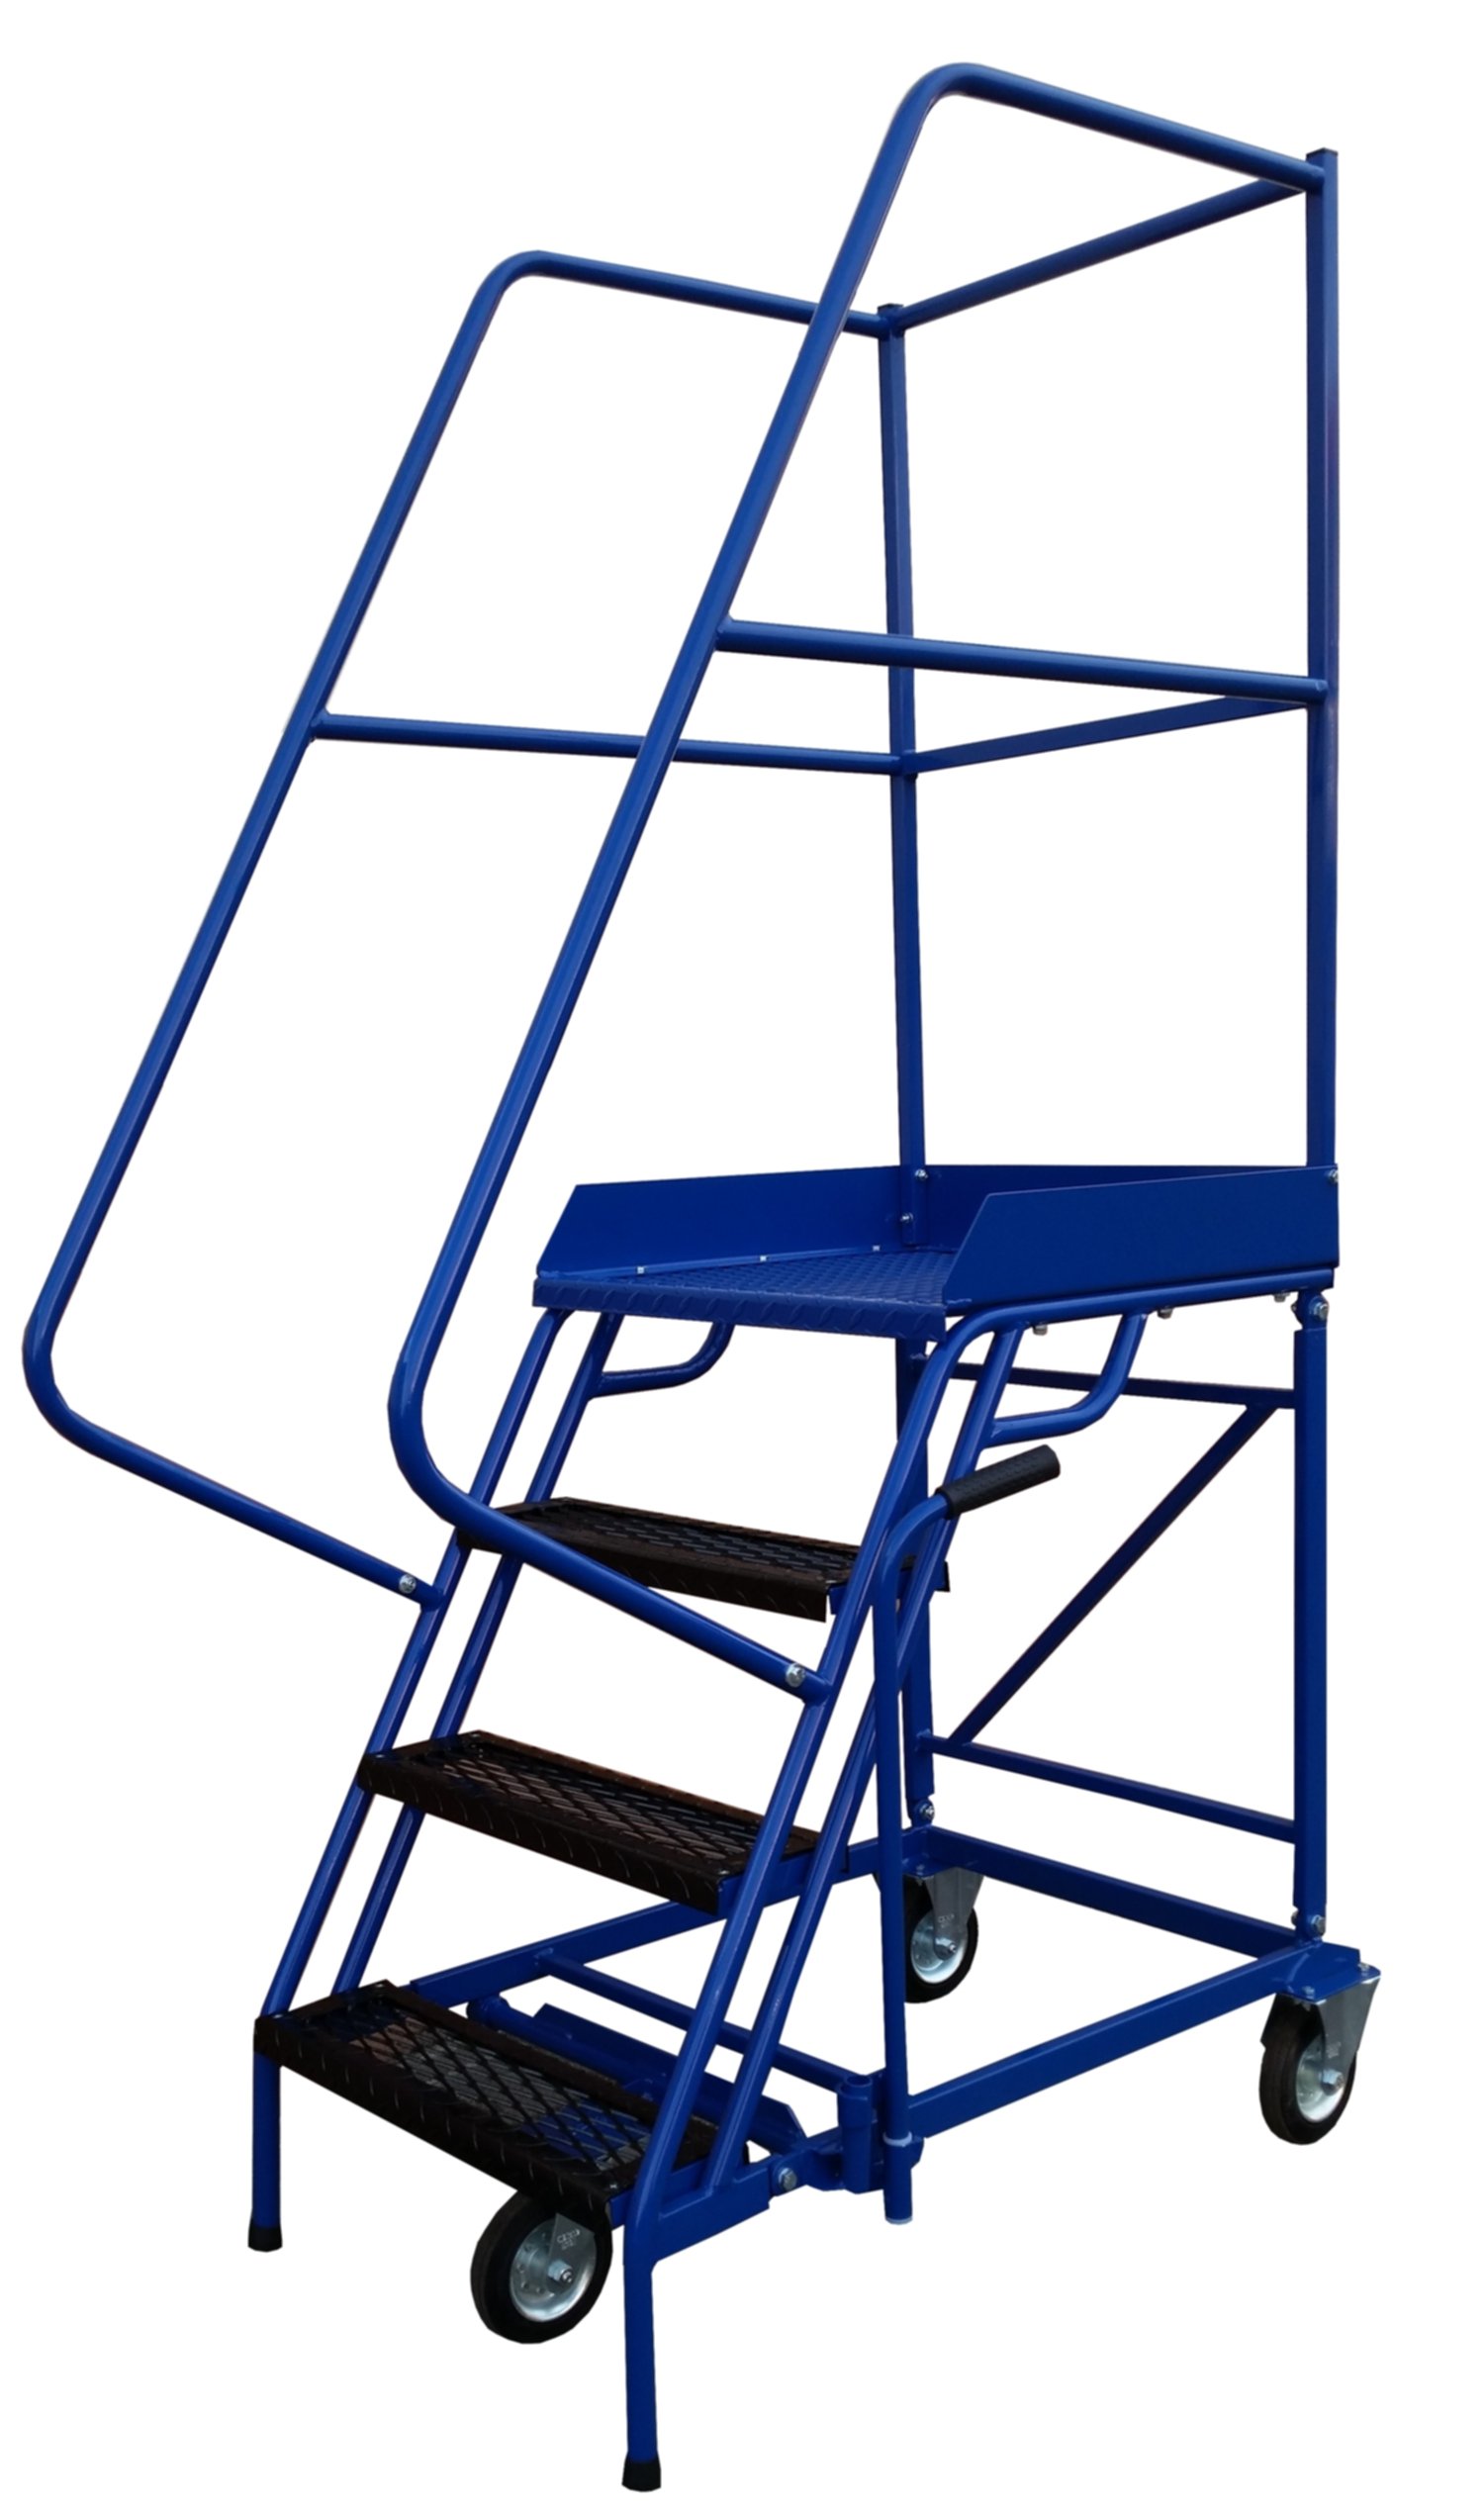 Warehouse ladder mobile with platform